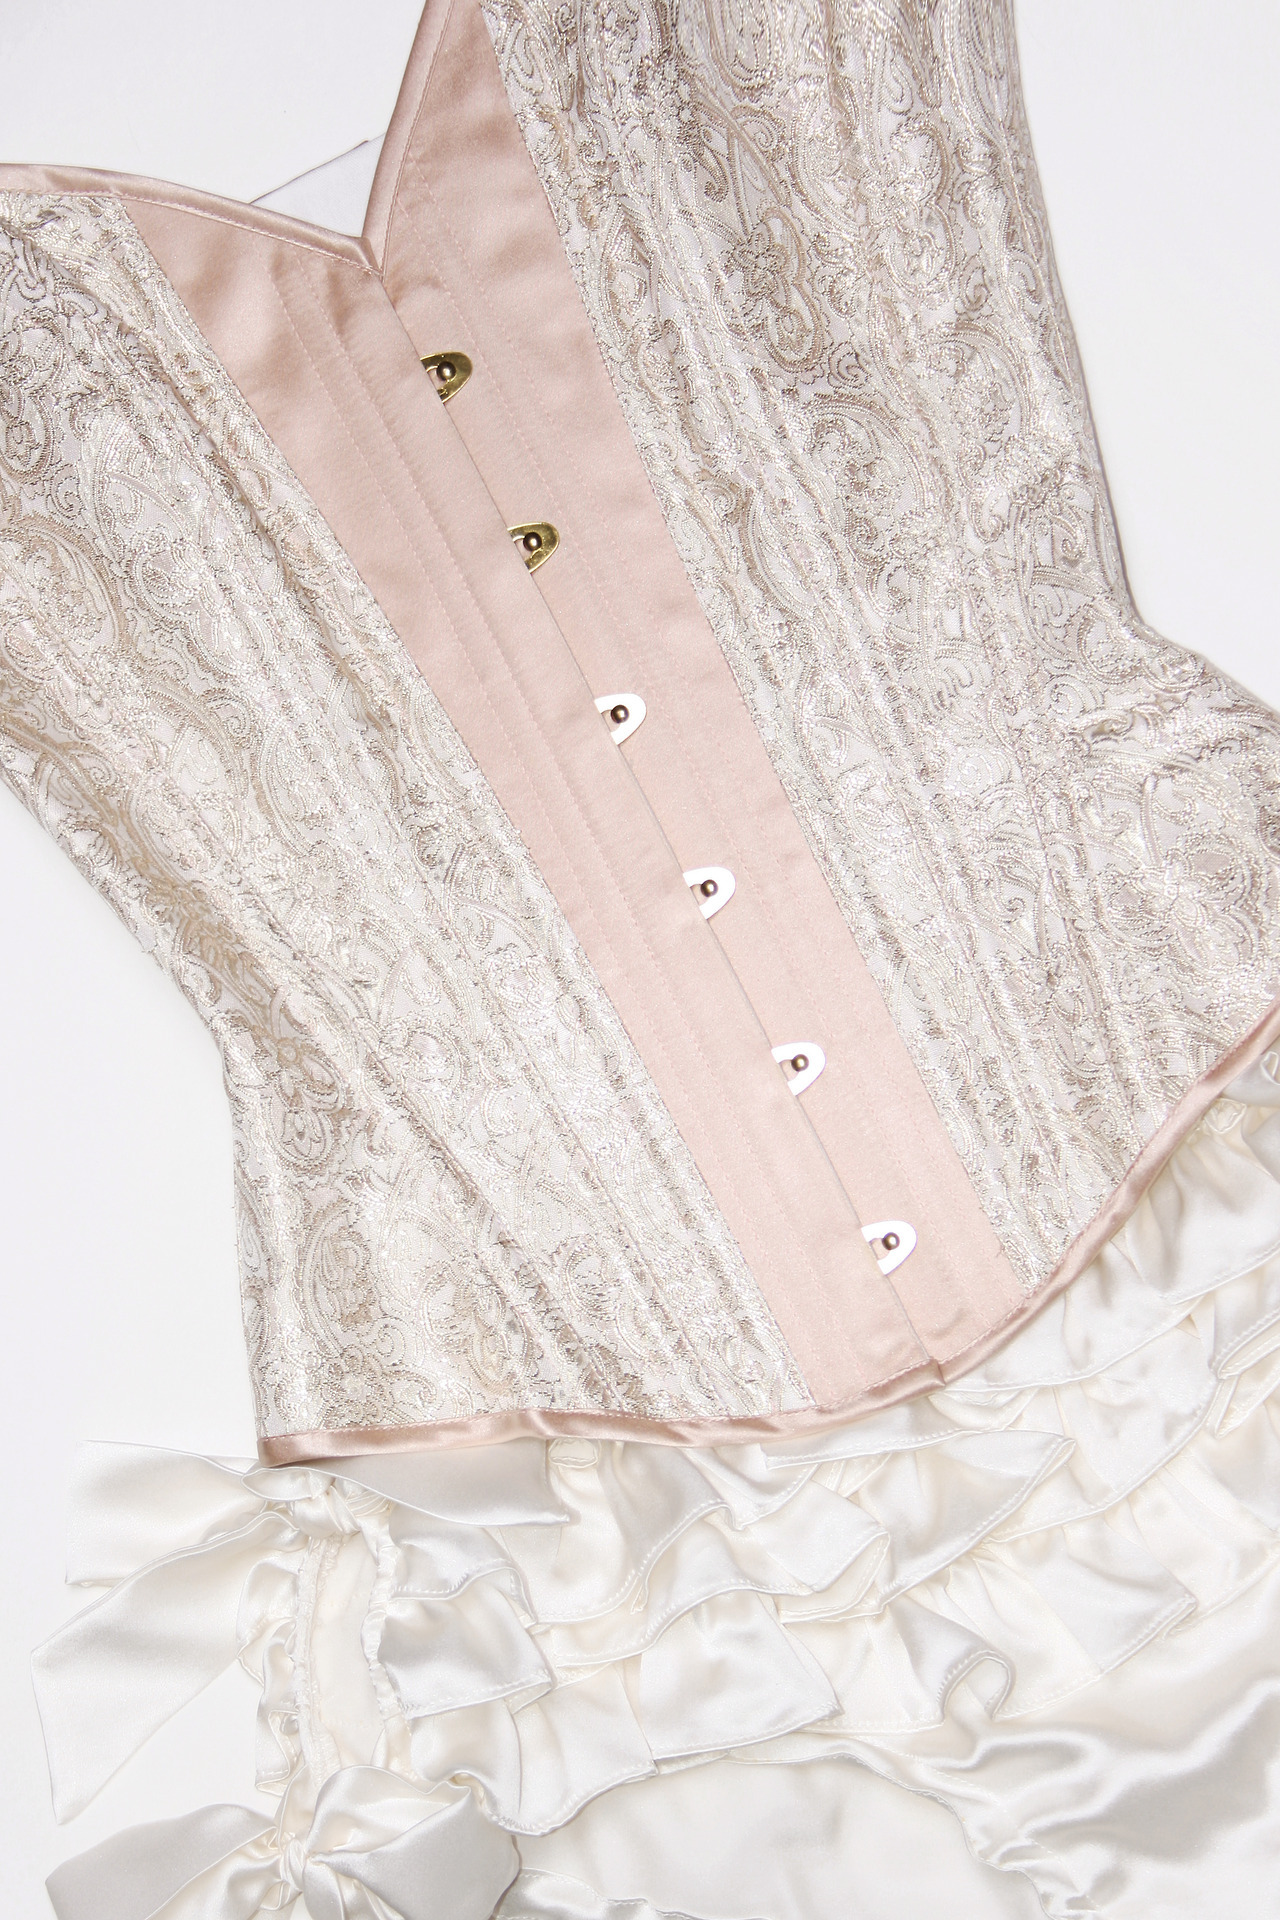 angelafriedman:
“The Isabel corset and silk ruffled panties from Angela Friedman lingerie